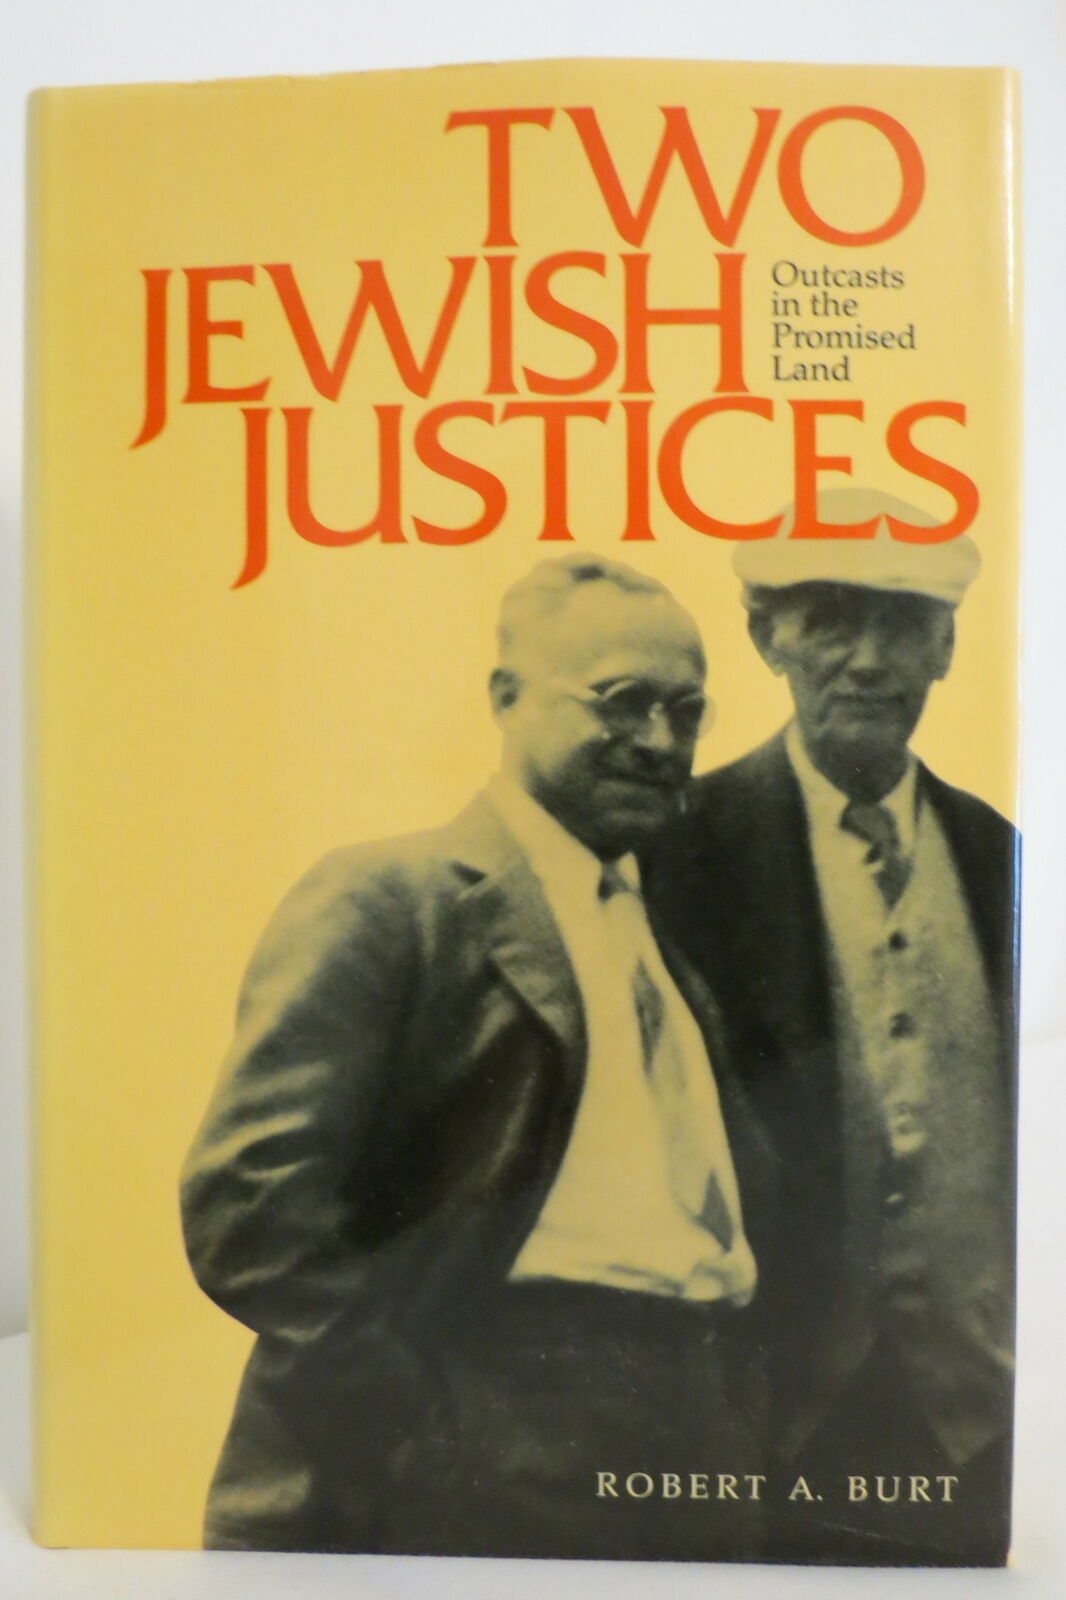 Robert A Burt TWO JEWISH JUSTICES 1988 First Edition 1st Printing NEW!!! Voltooi uw verzendopdracht